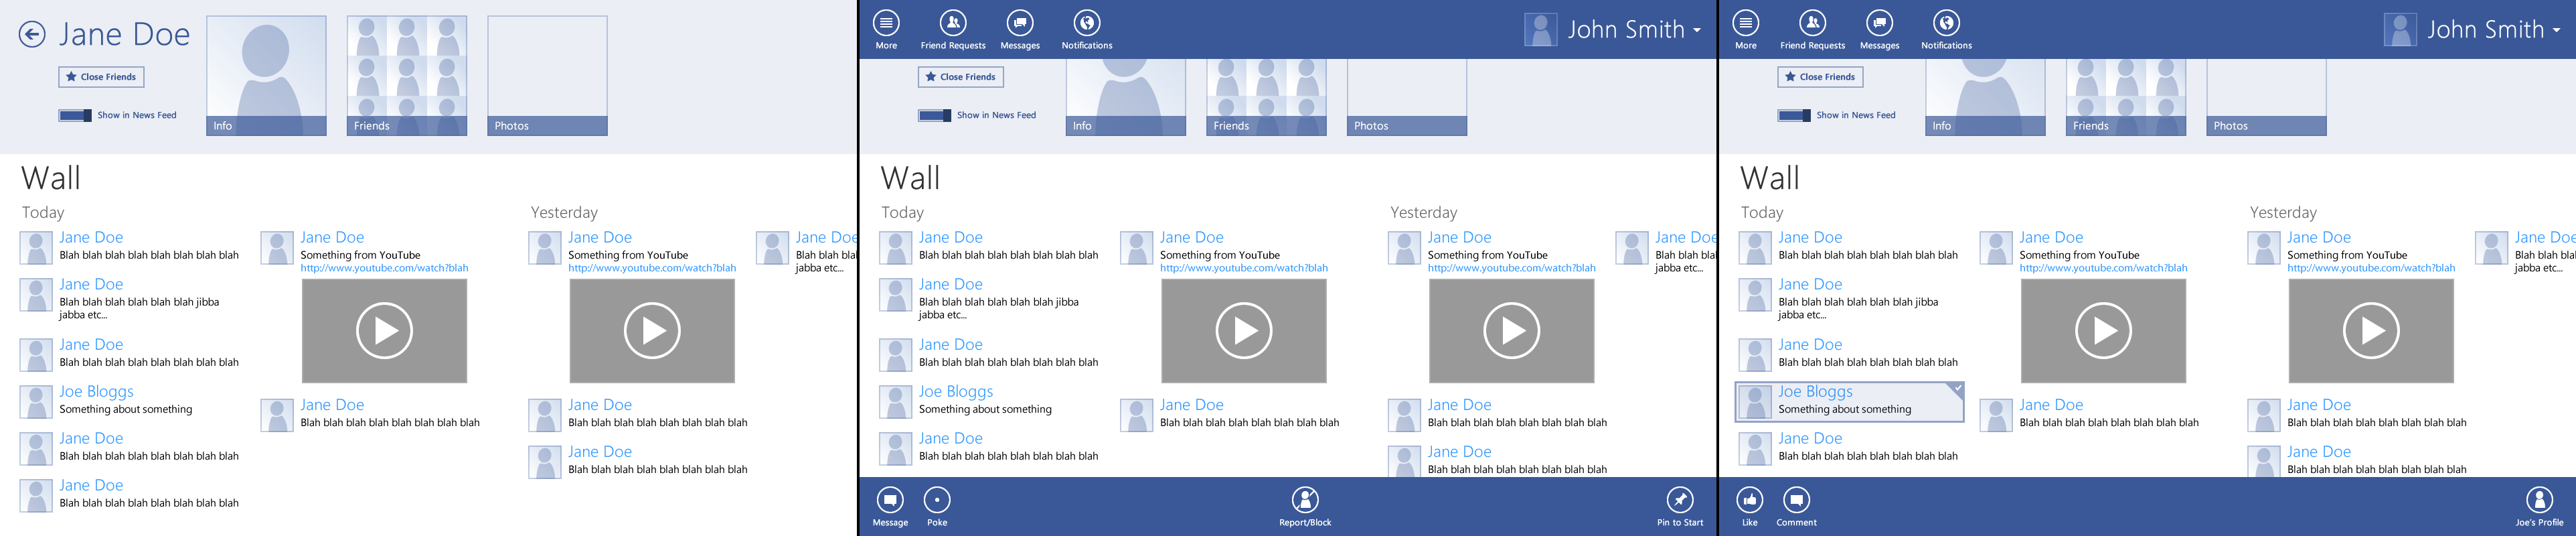 Windows 8 Facebook App Concept